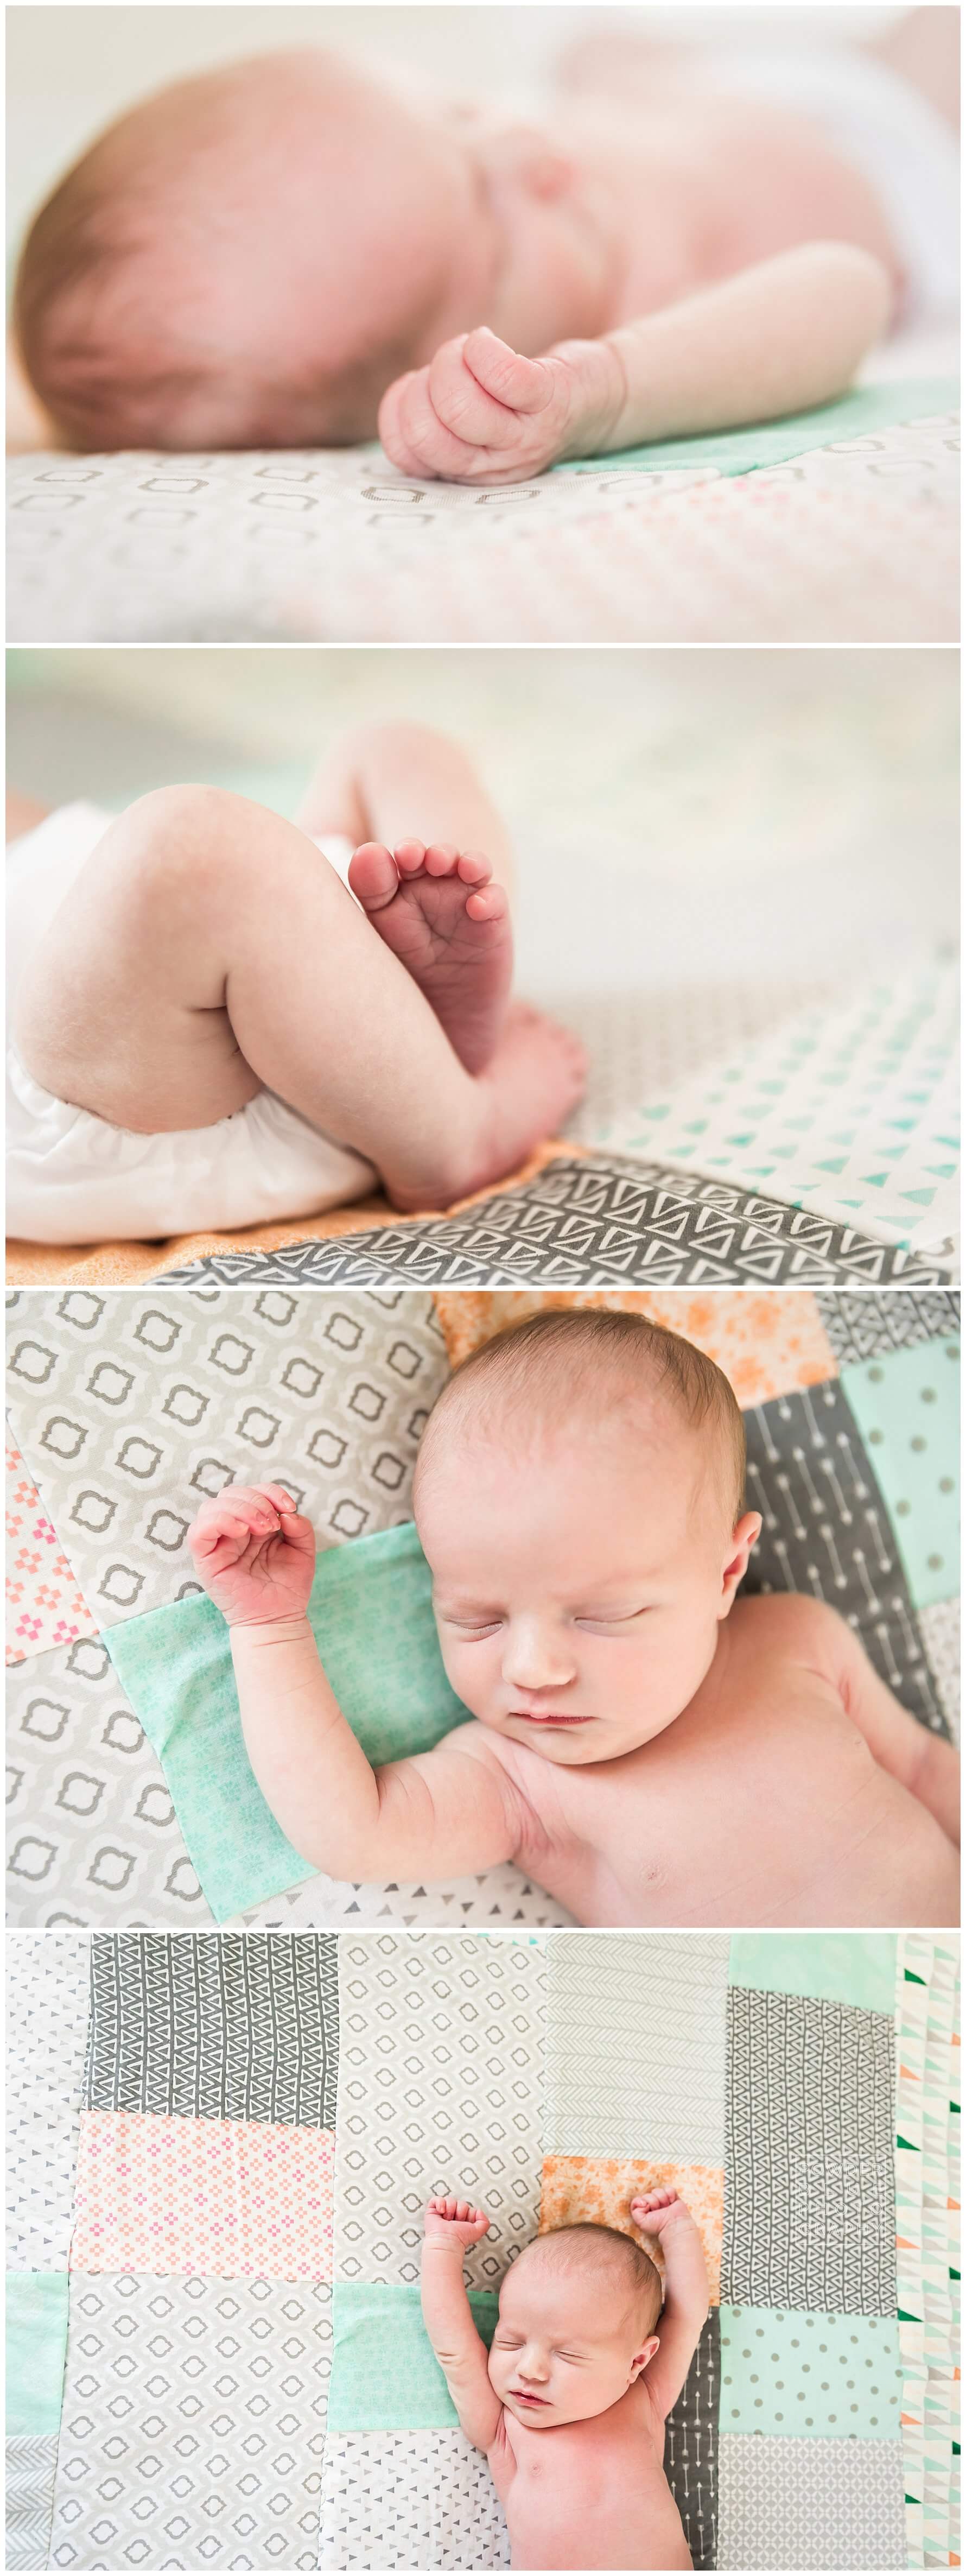 pittsburgh newborn photographer. simple, natural newborn portrait on location in white crib. baby girl. handmade quilt. 